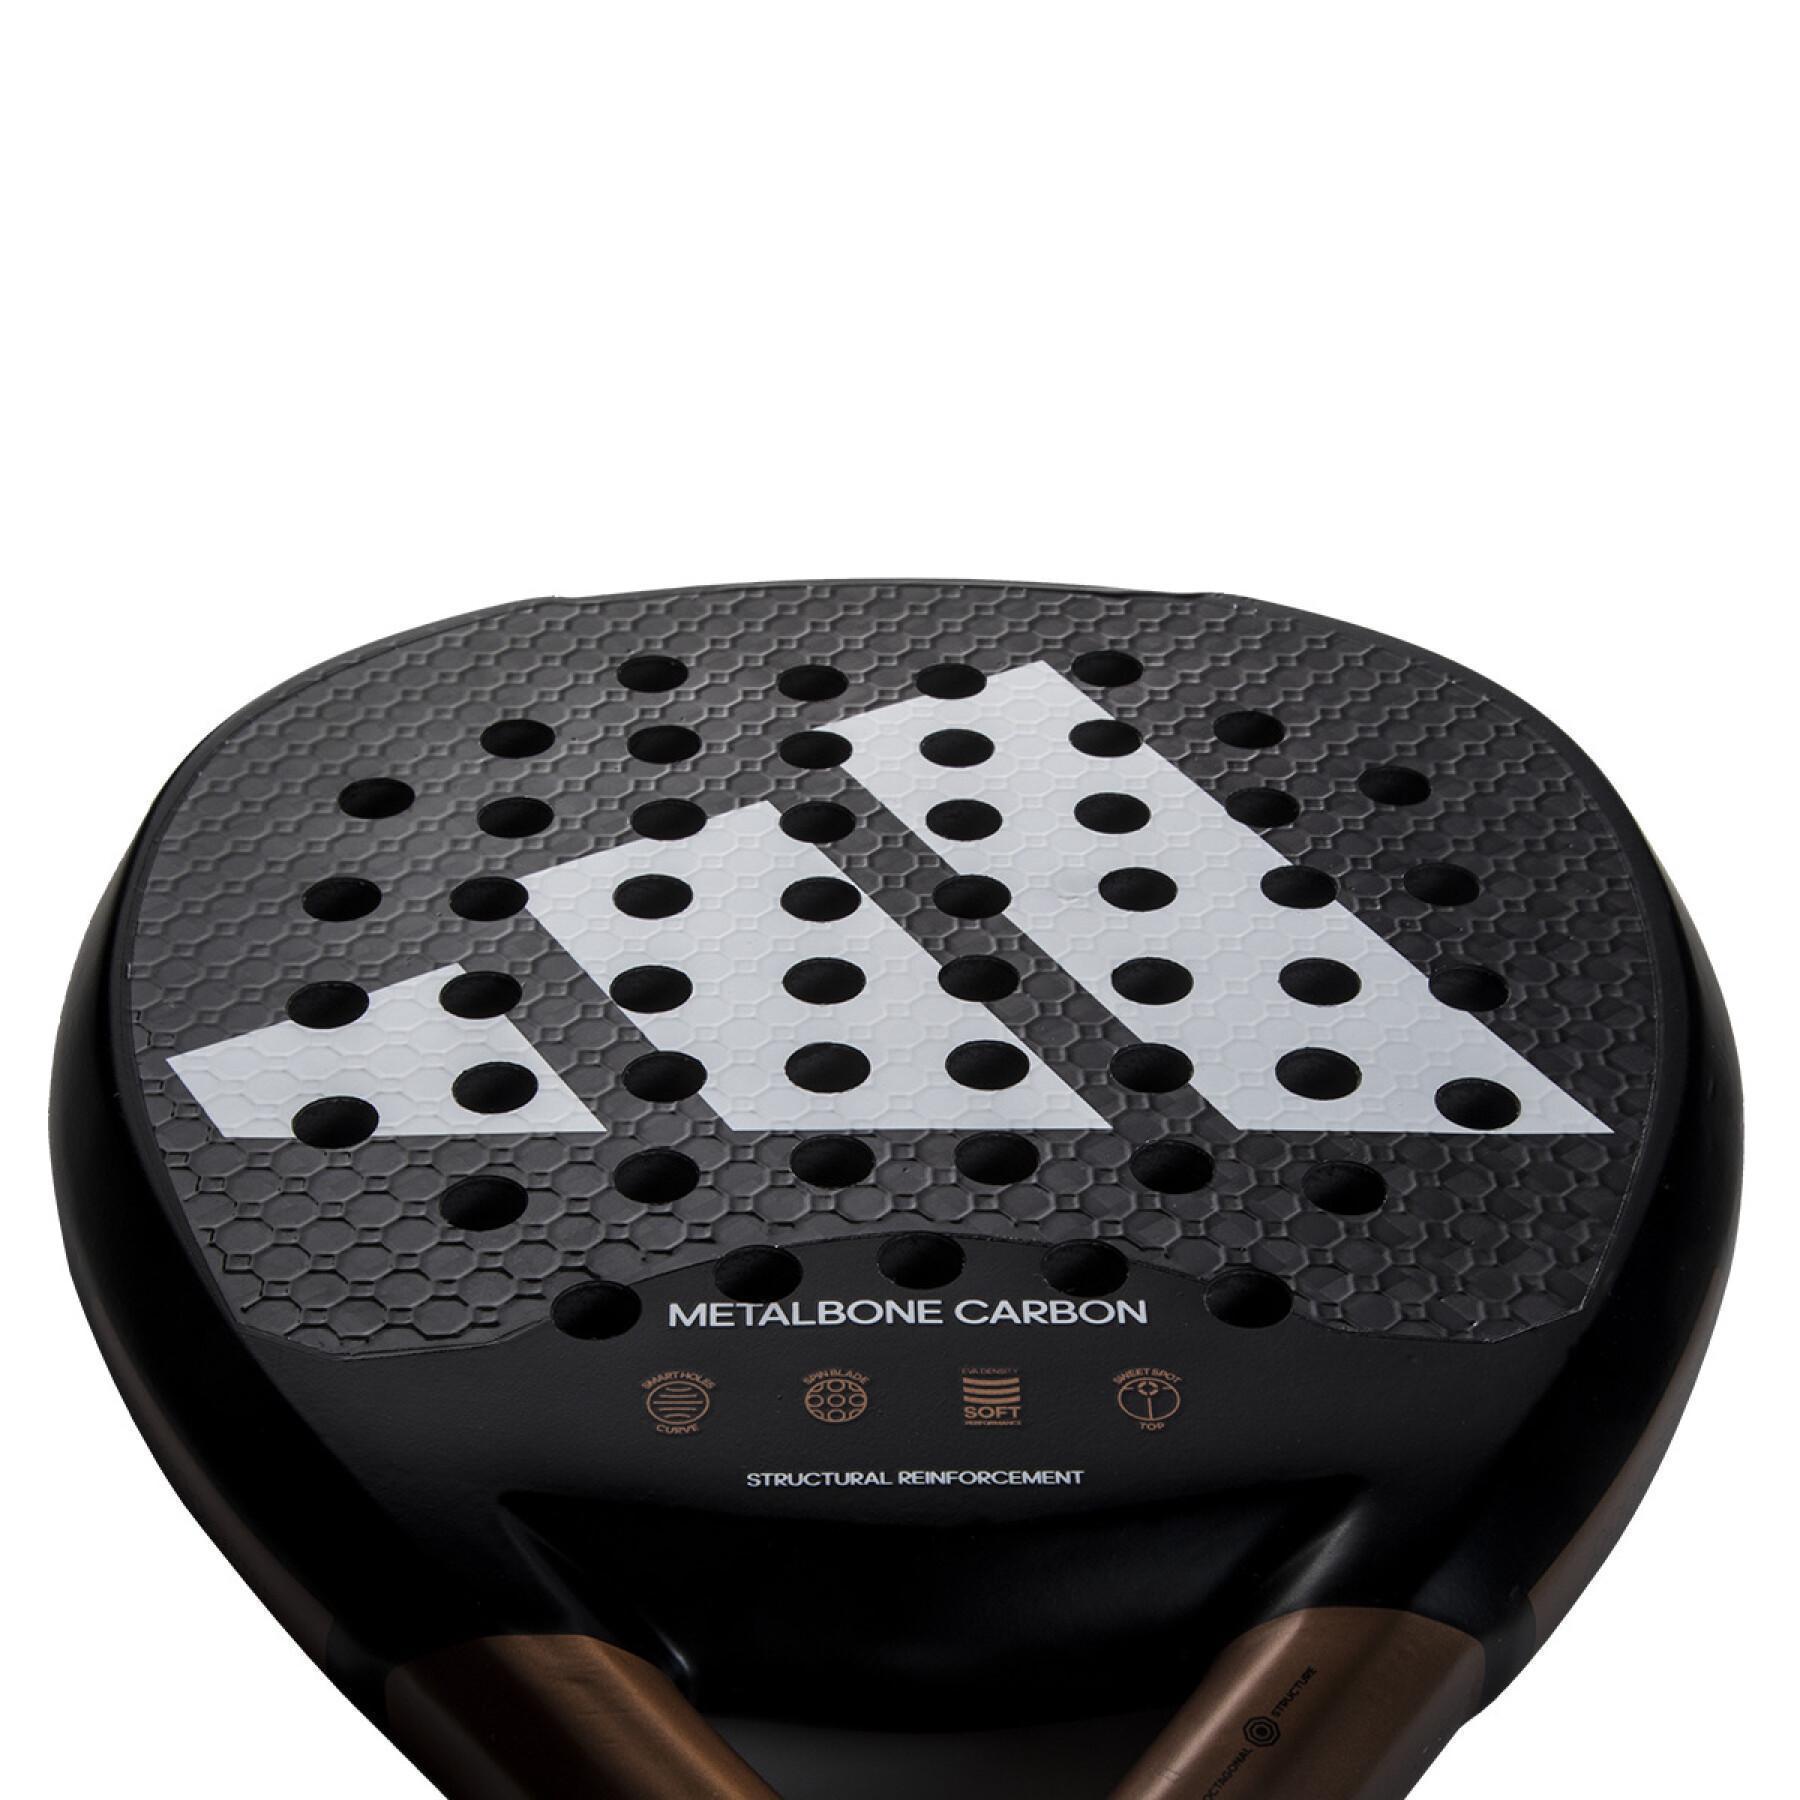 Racket from padel adidas Metalbone Carbon